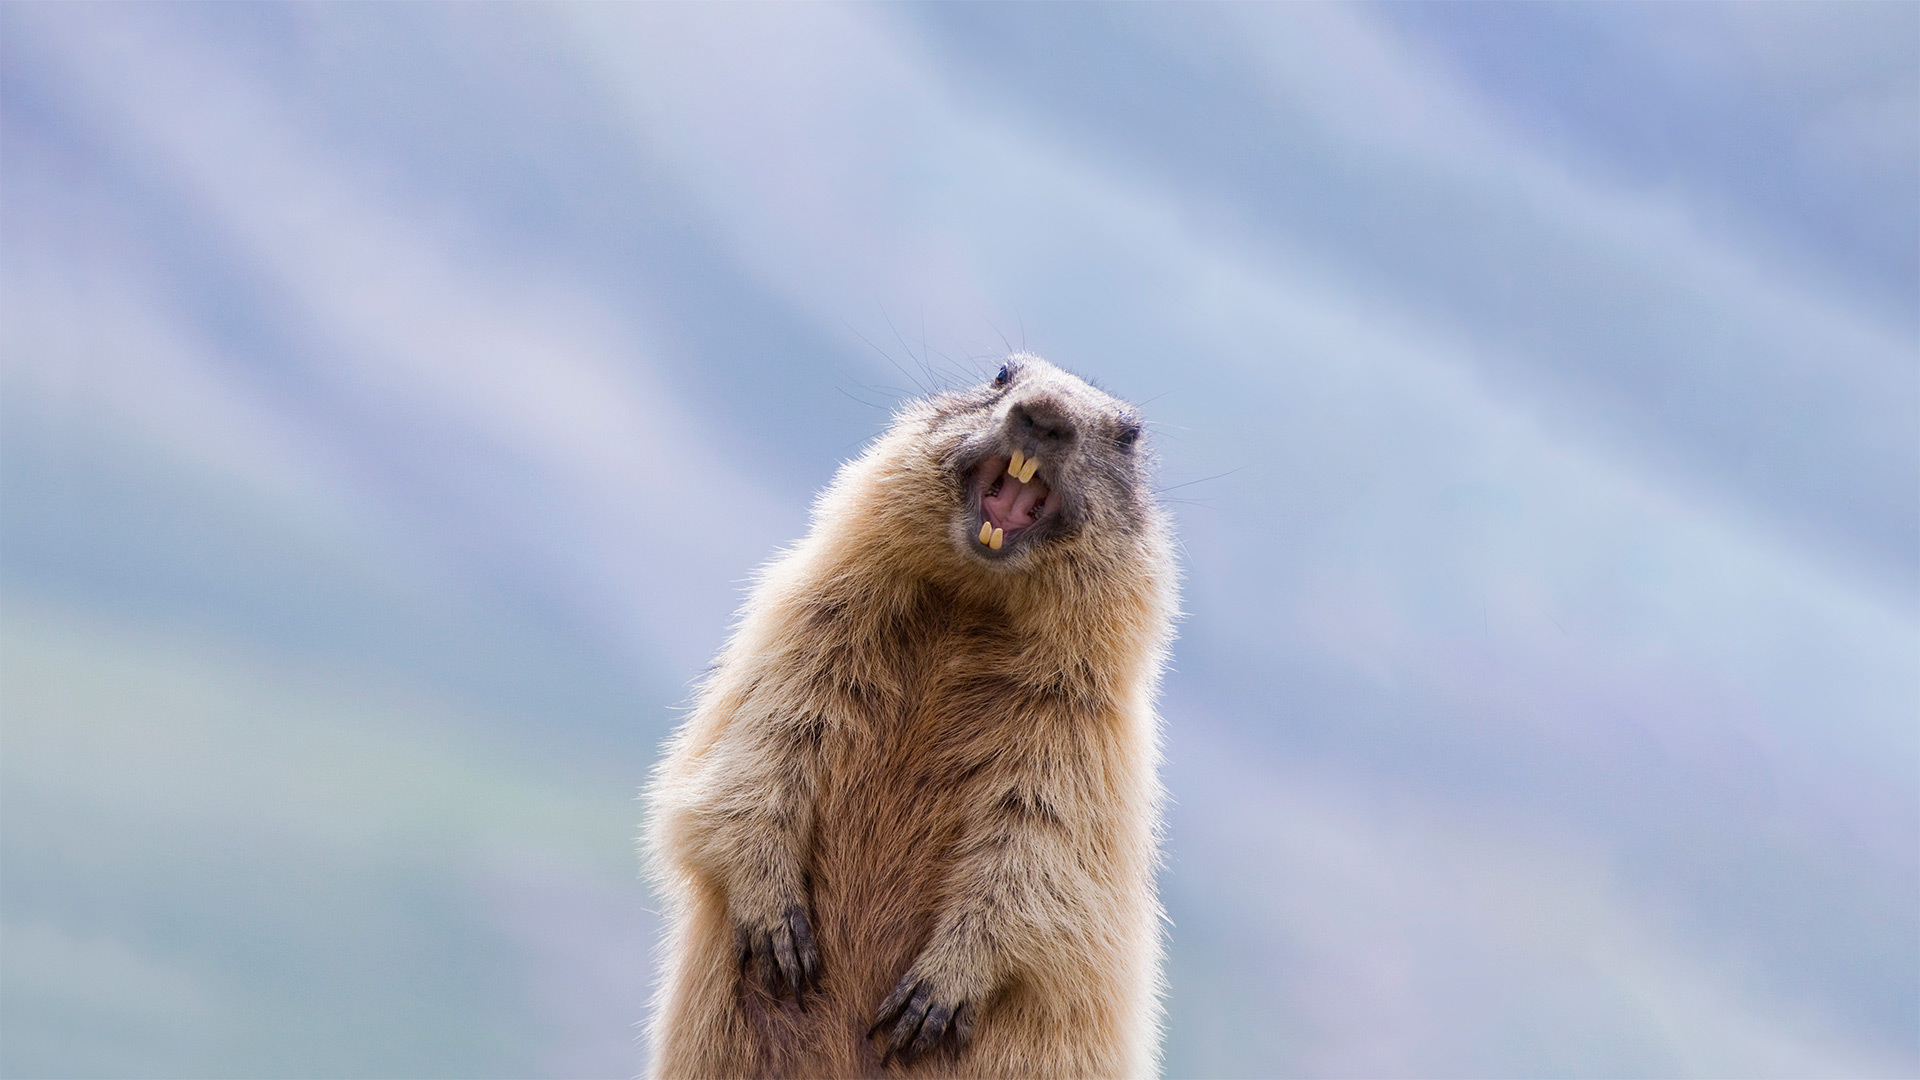 Alpine marmot in Hohe Tauern National Park, Austria - Misja Smits